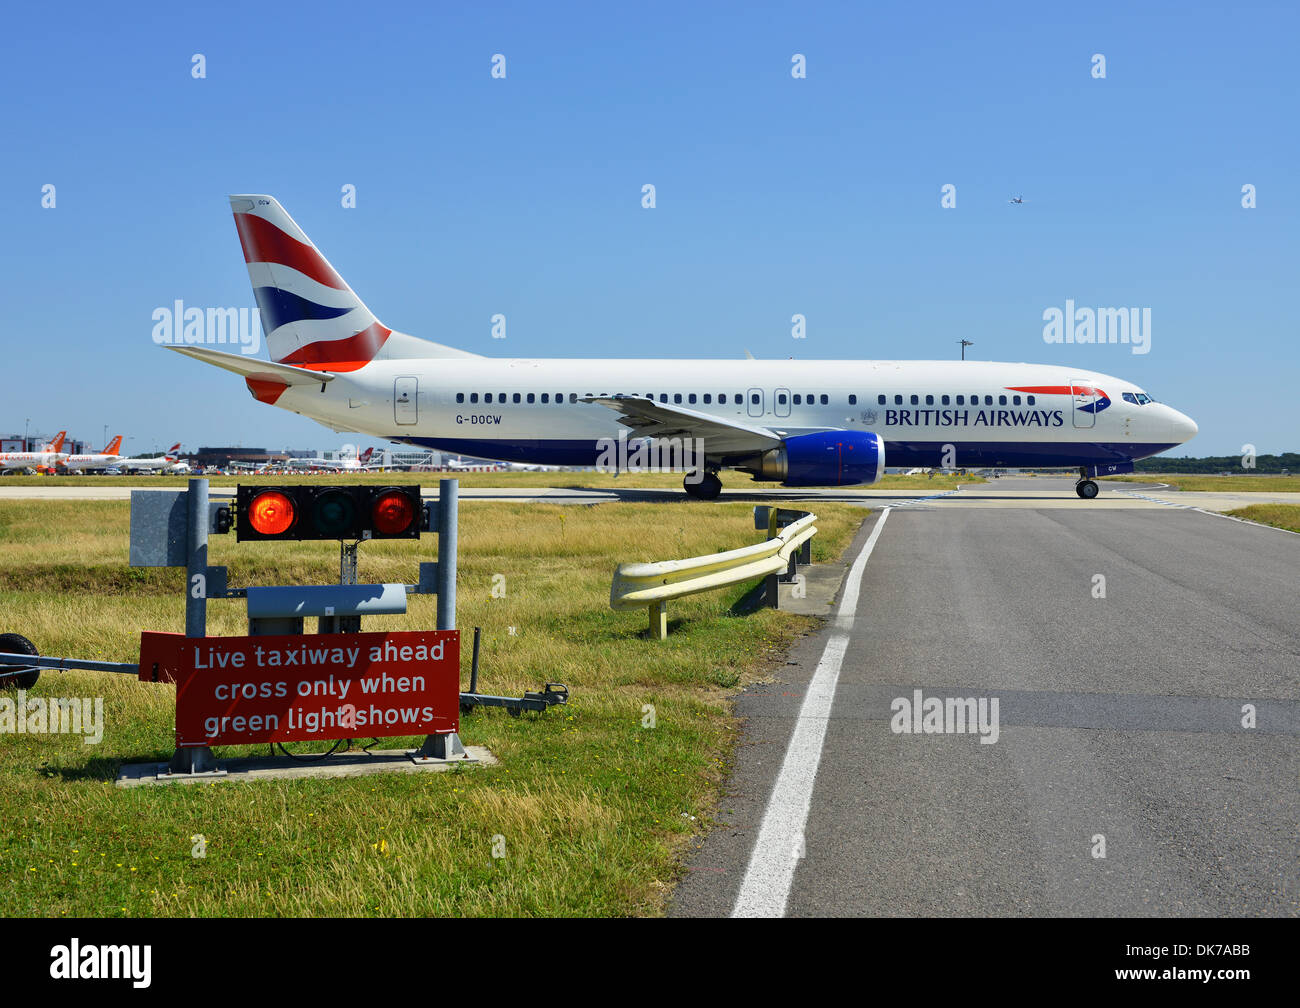 British Airways, BA, Aircraft, plane Stock Photo